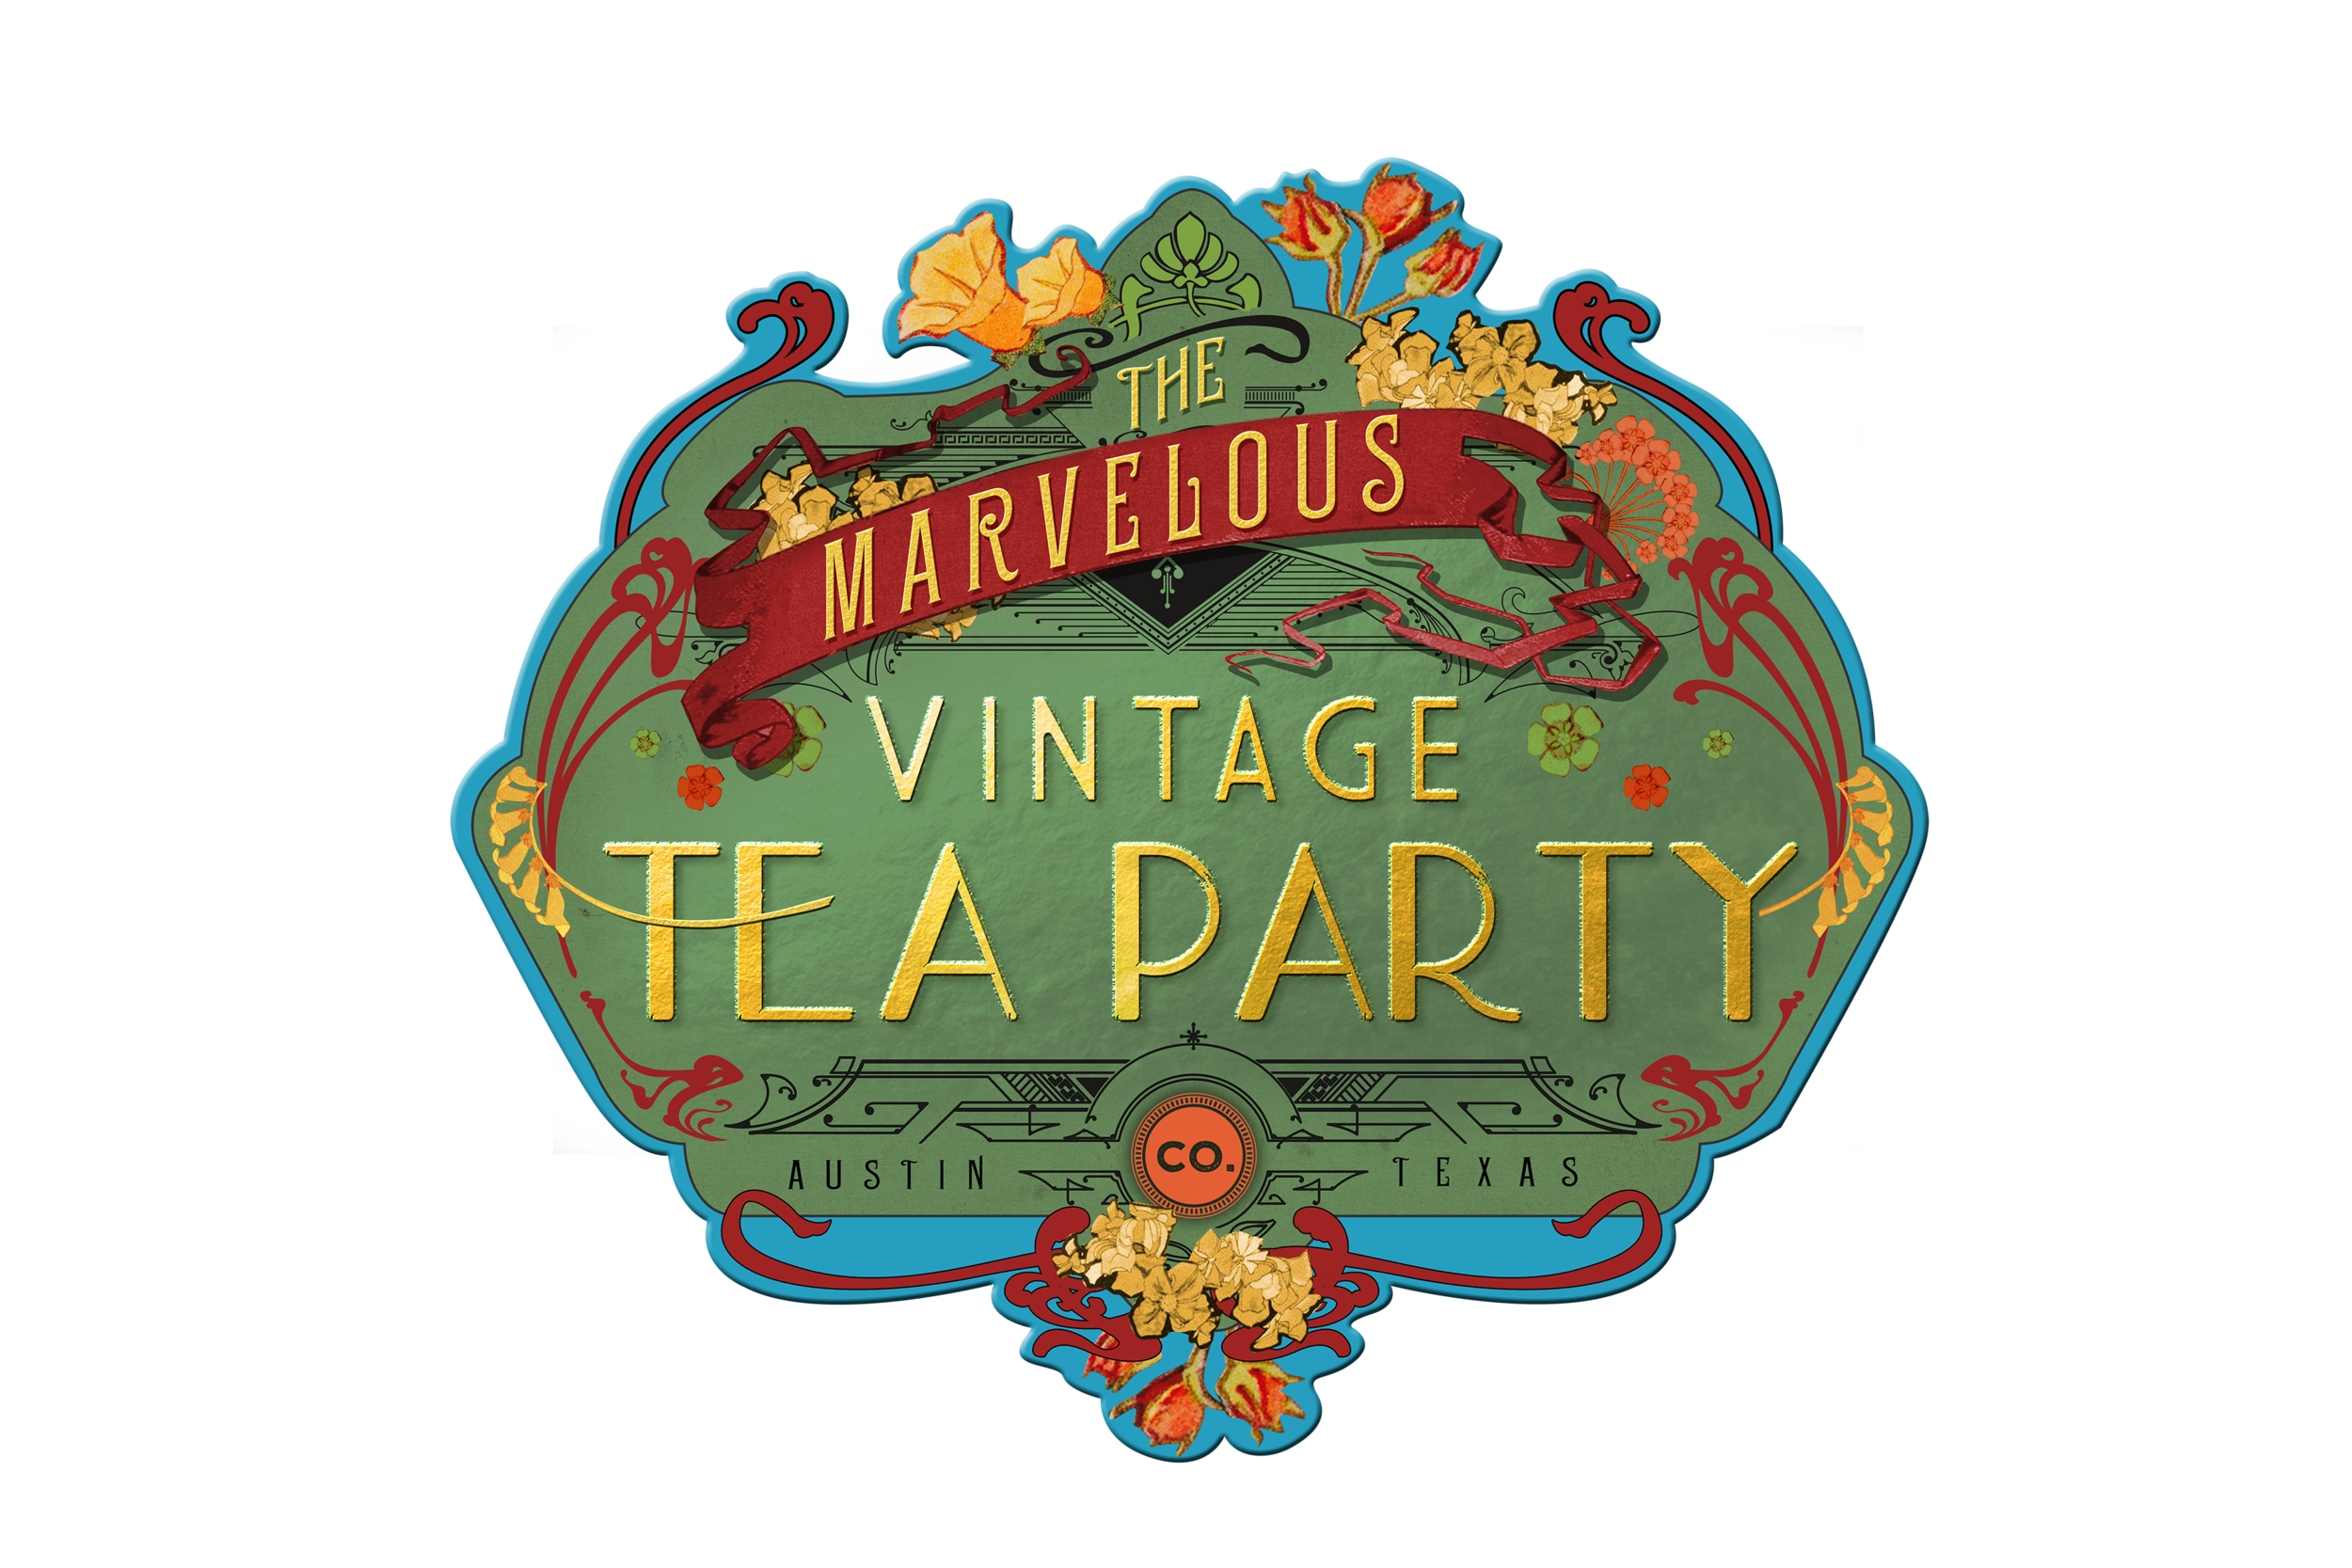 Marvelous Vintage Tea Party Company